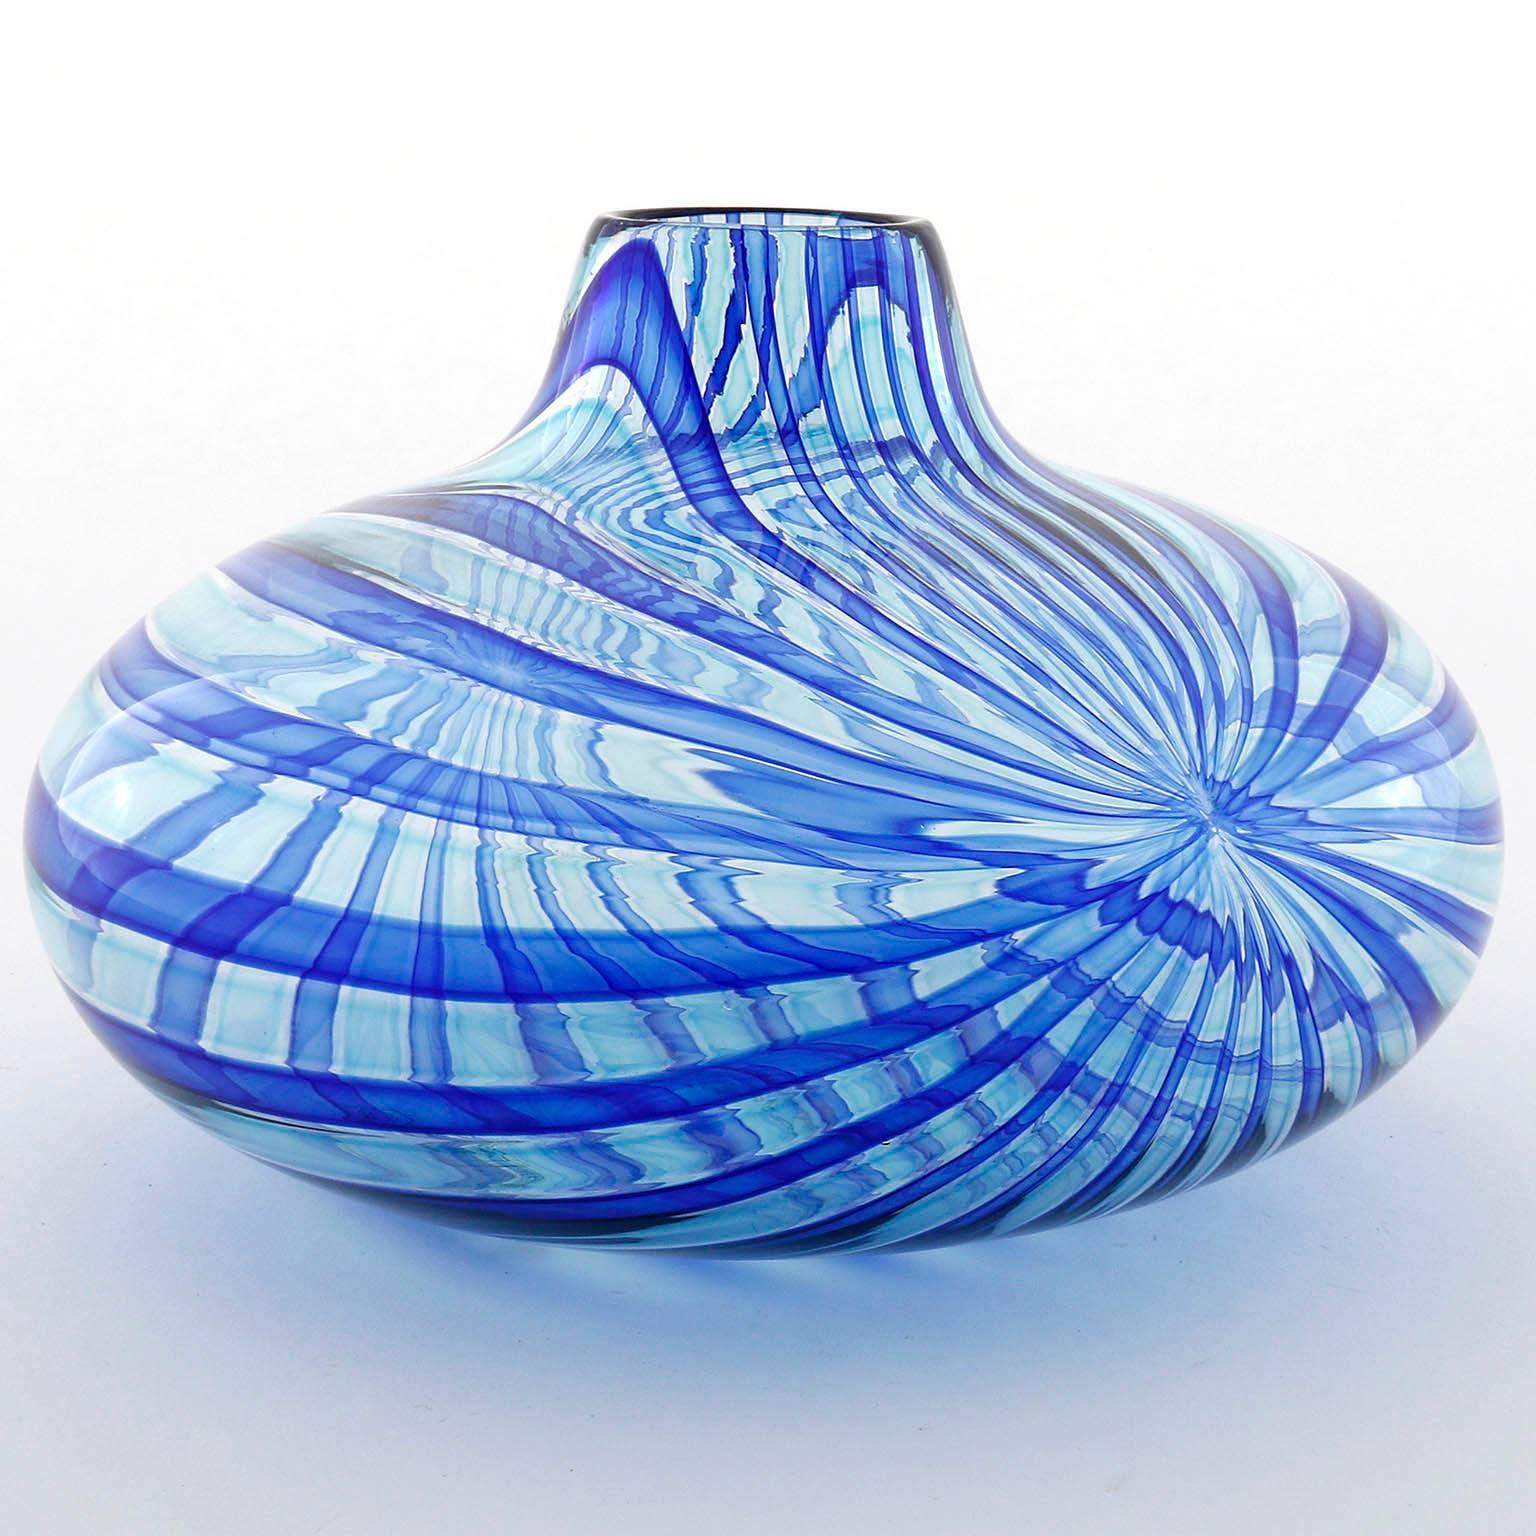 Italian Blue Glass Vase 'Samarcanda' Lino Tagliapietra Effetre International, Italy 1986